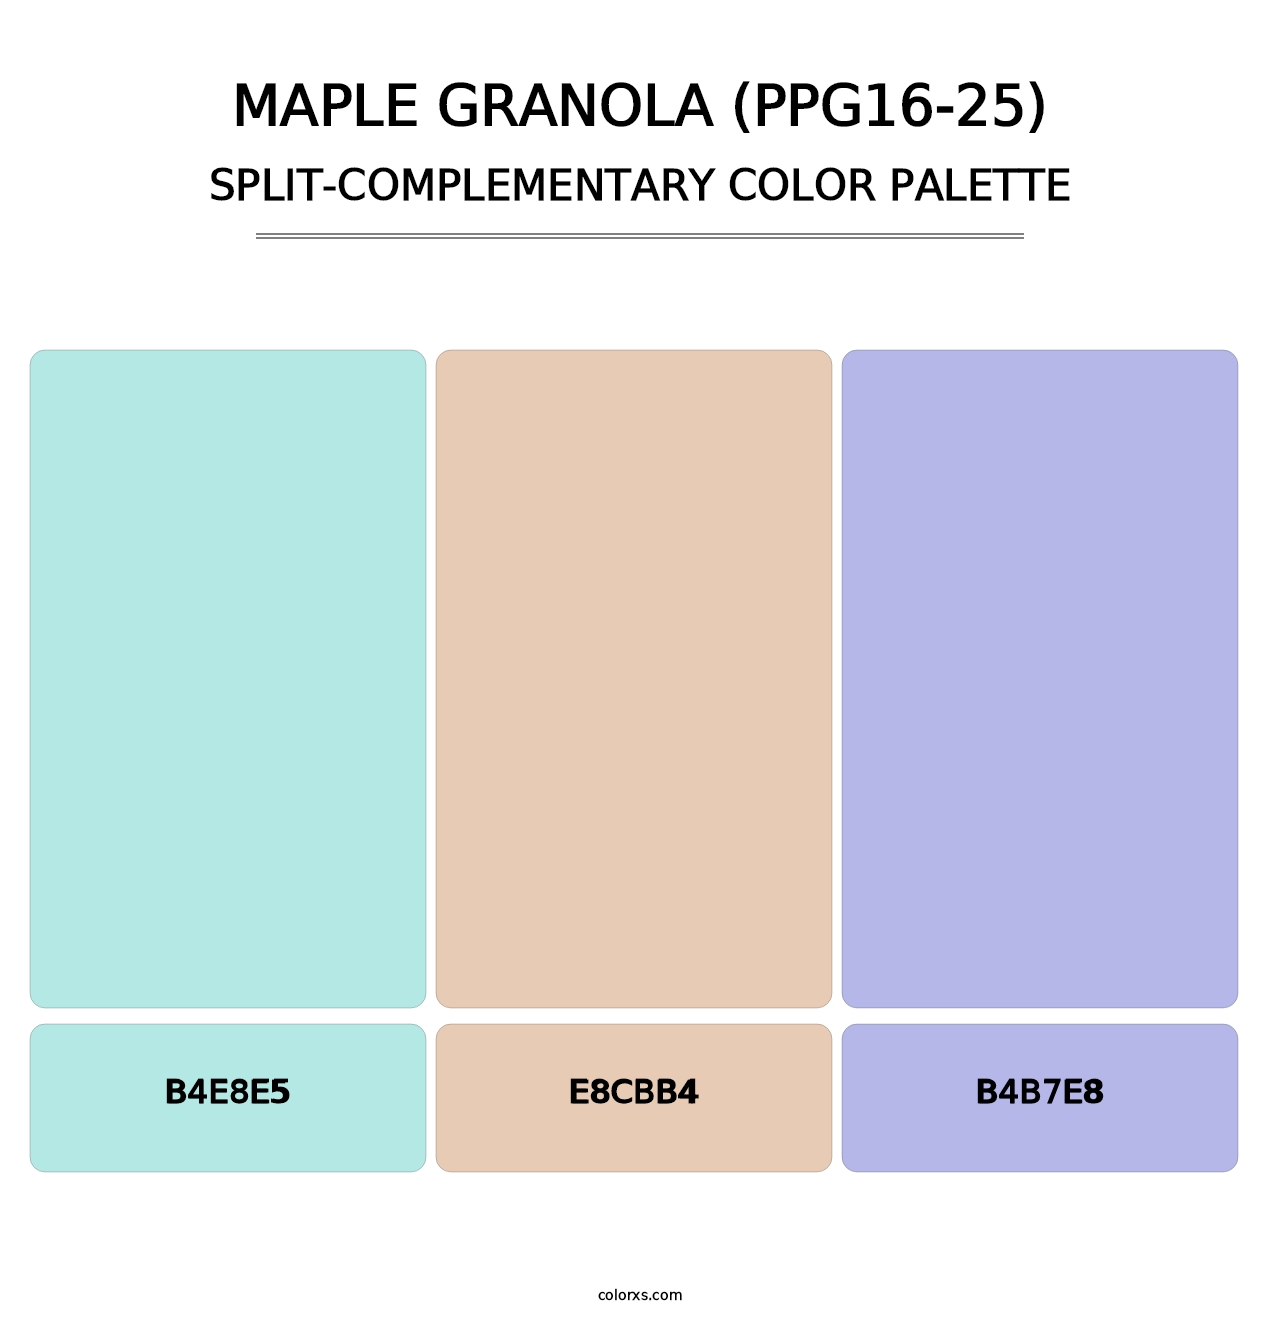 Maple Granola (PPG16-25) - Split-Complementary Color Palette